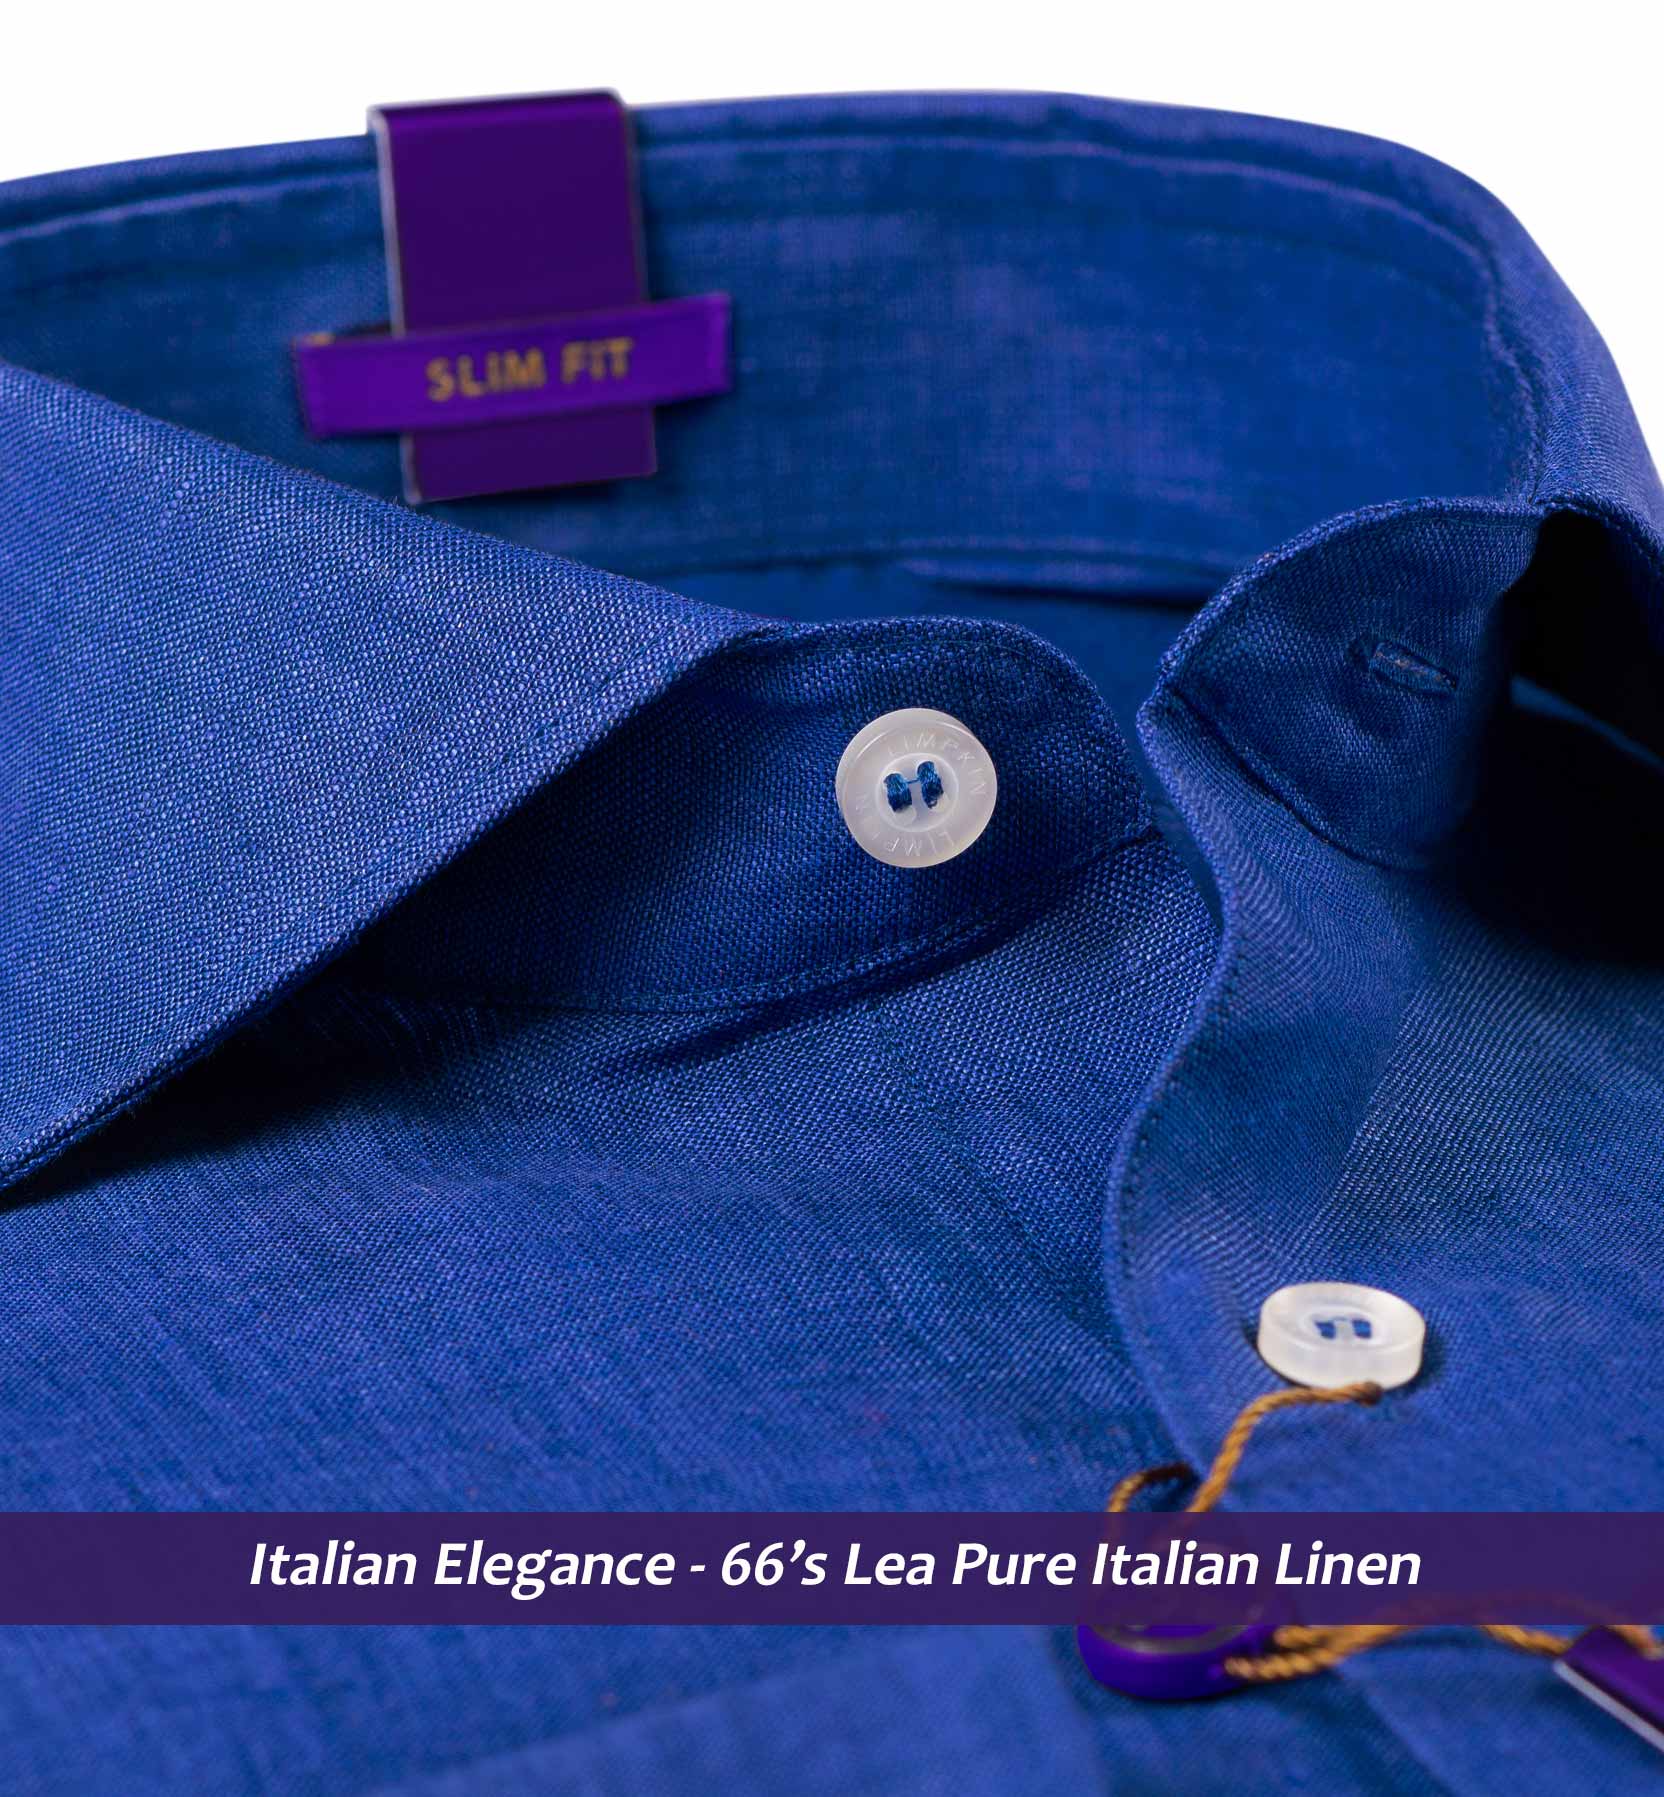 Sanibel- Royal Blue Solid Linen- 66's Lea Pure Italian Linen